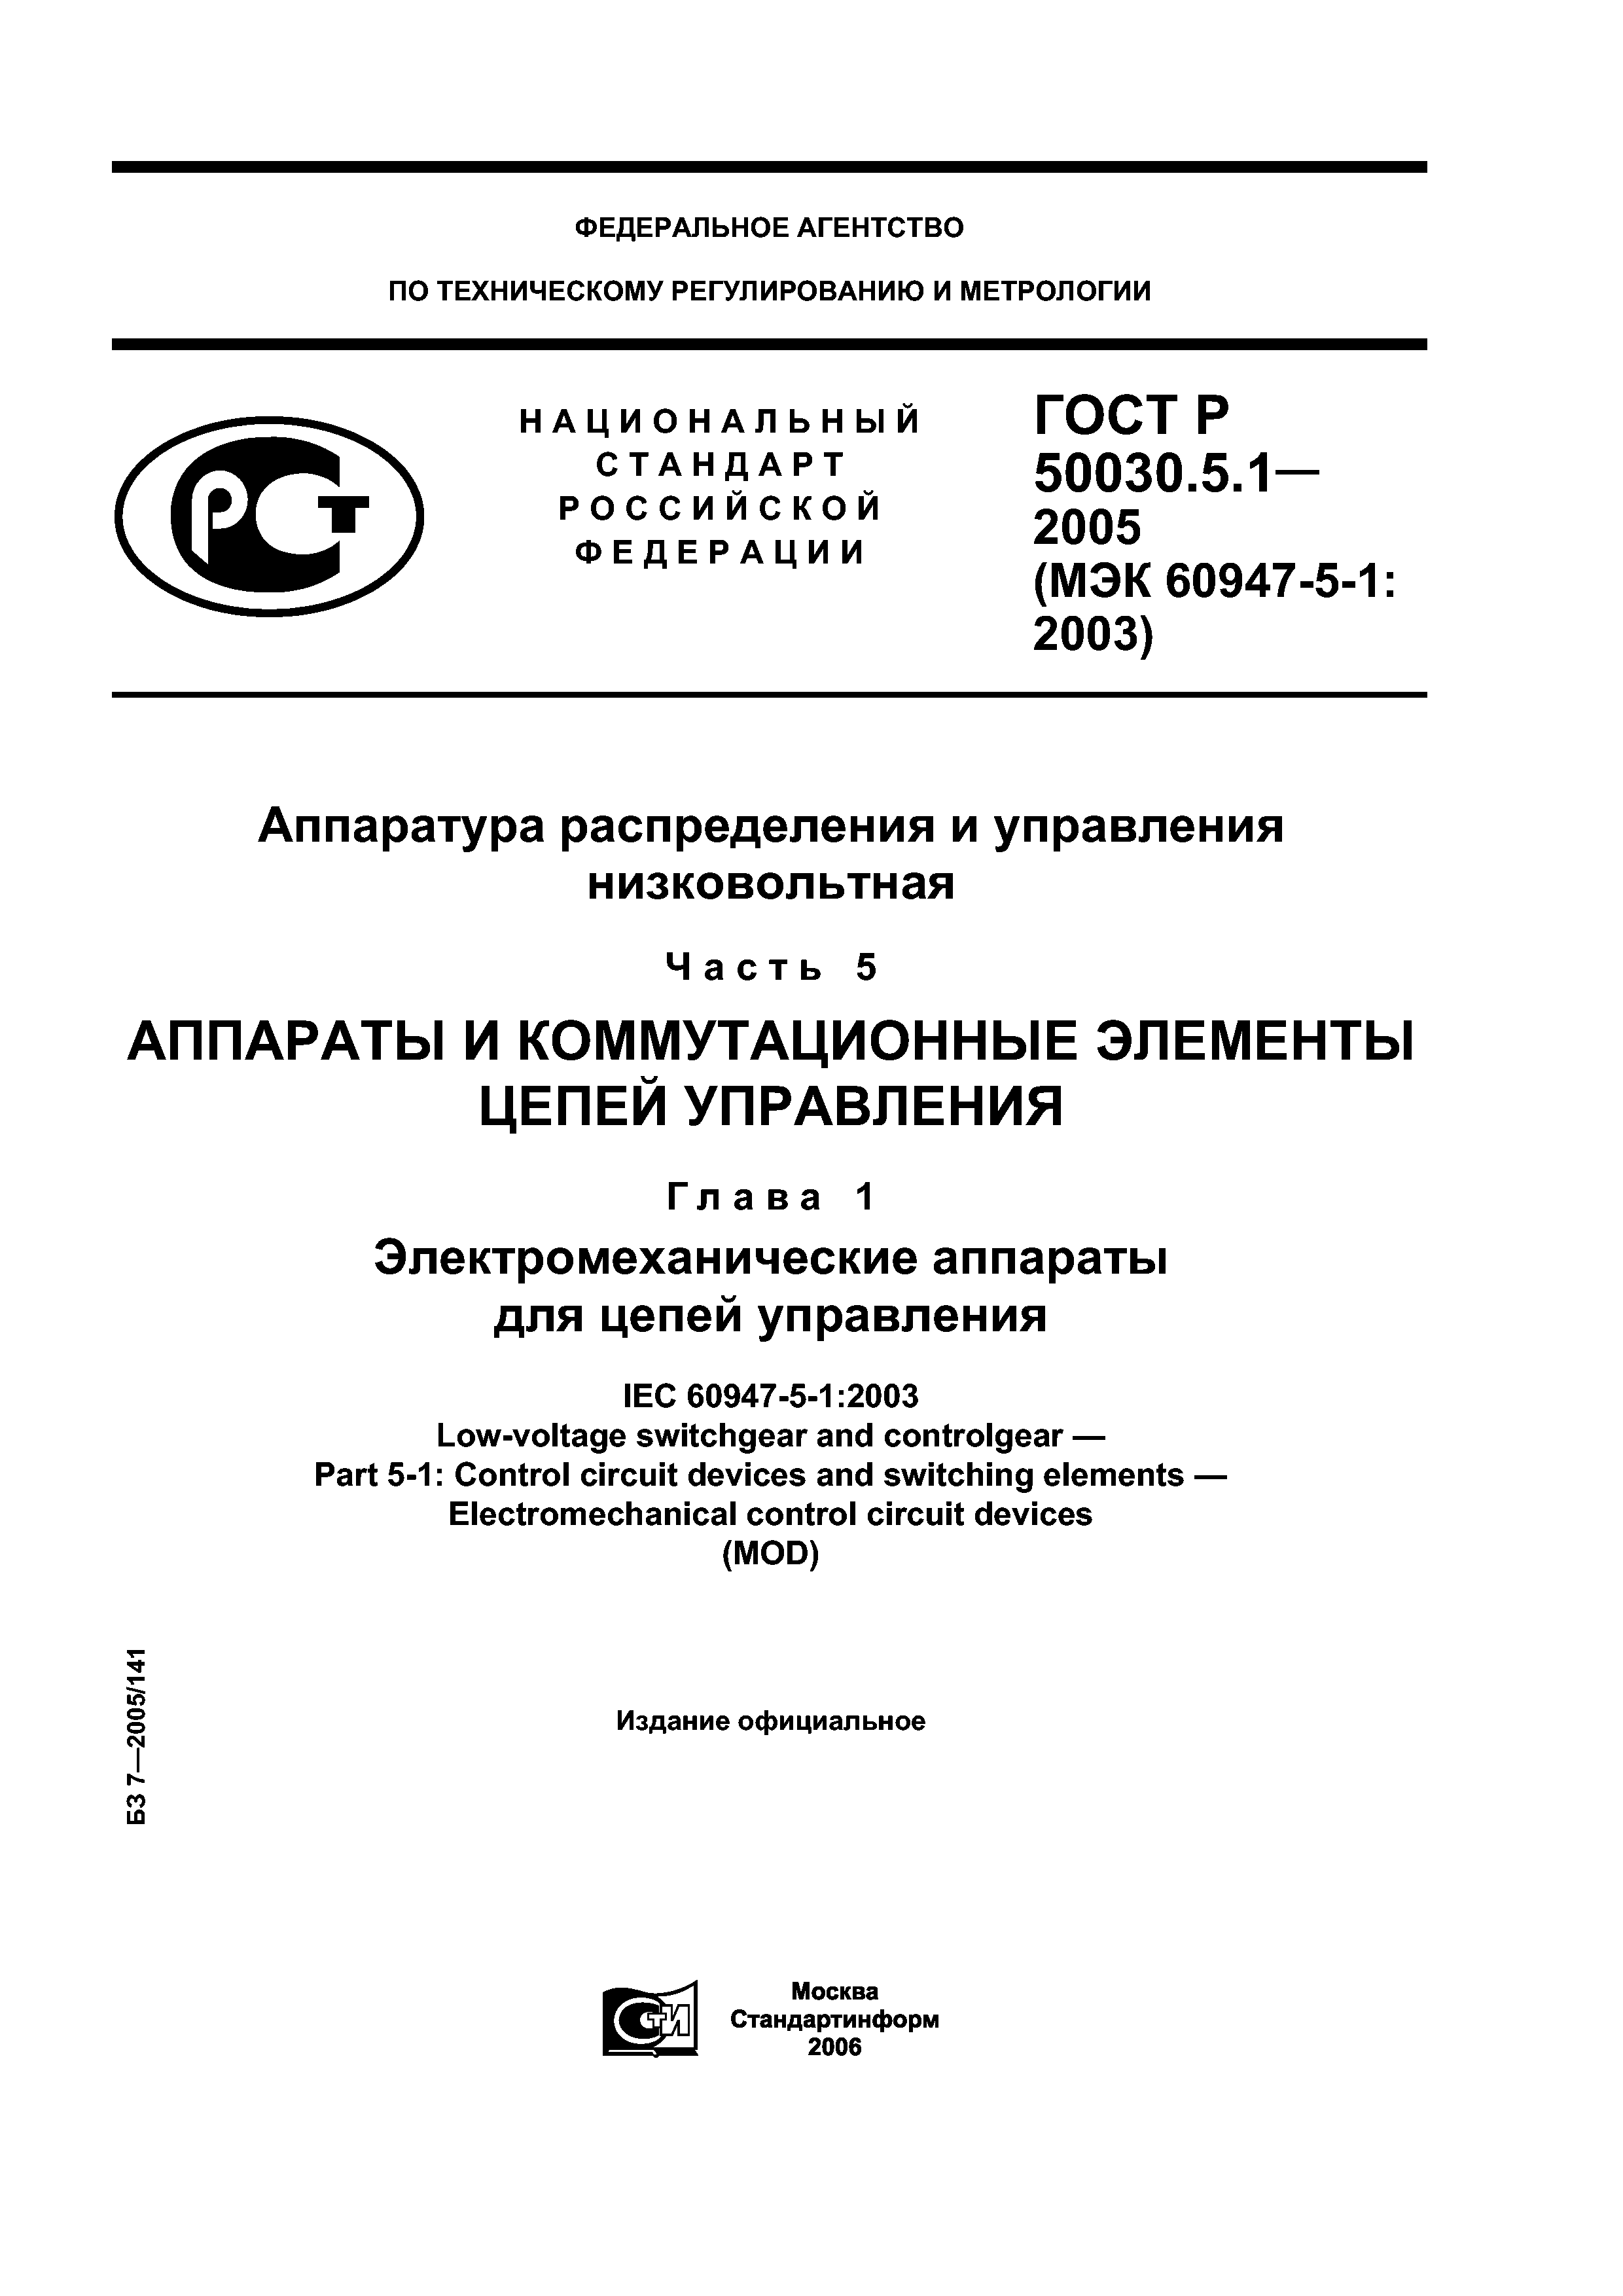 ГОСТ Р 50030.5.1-2005